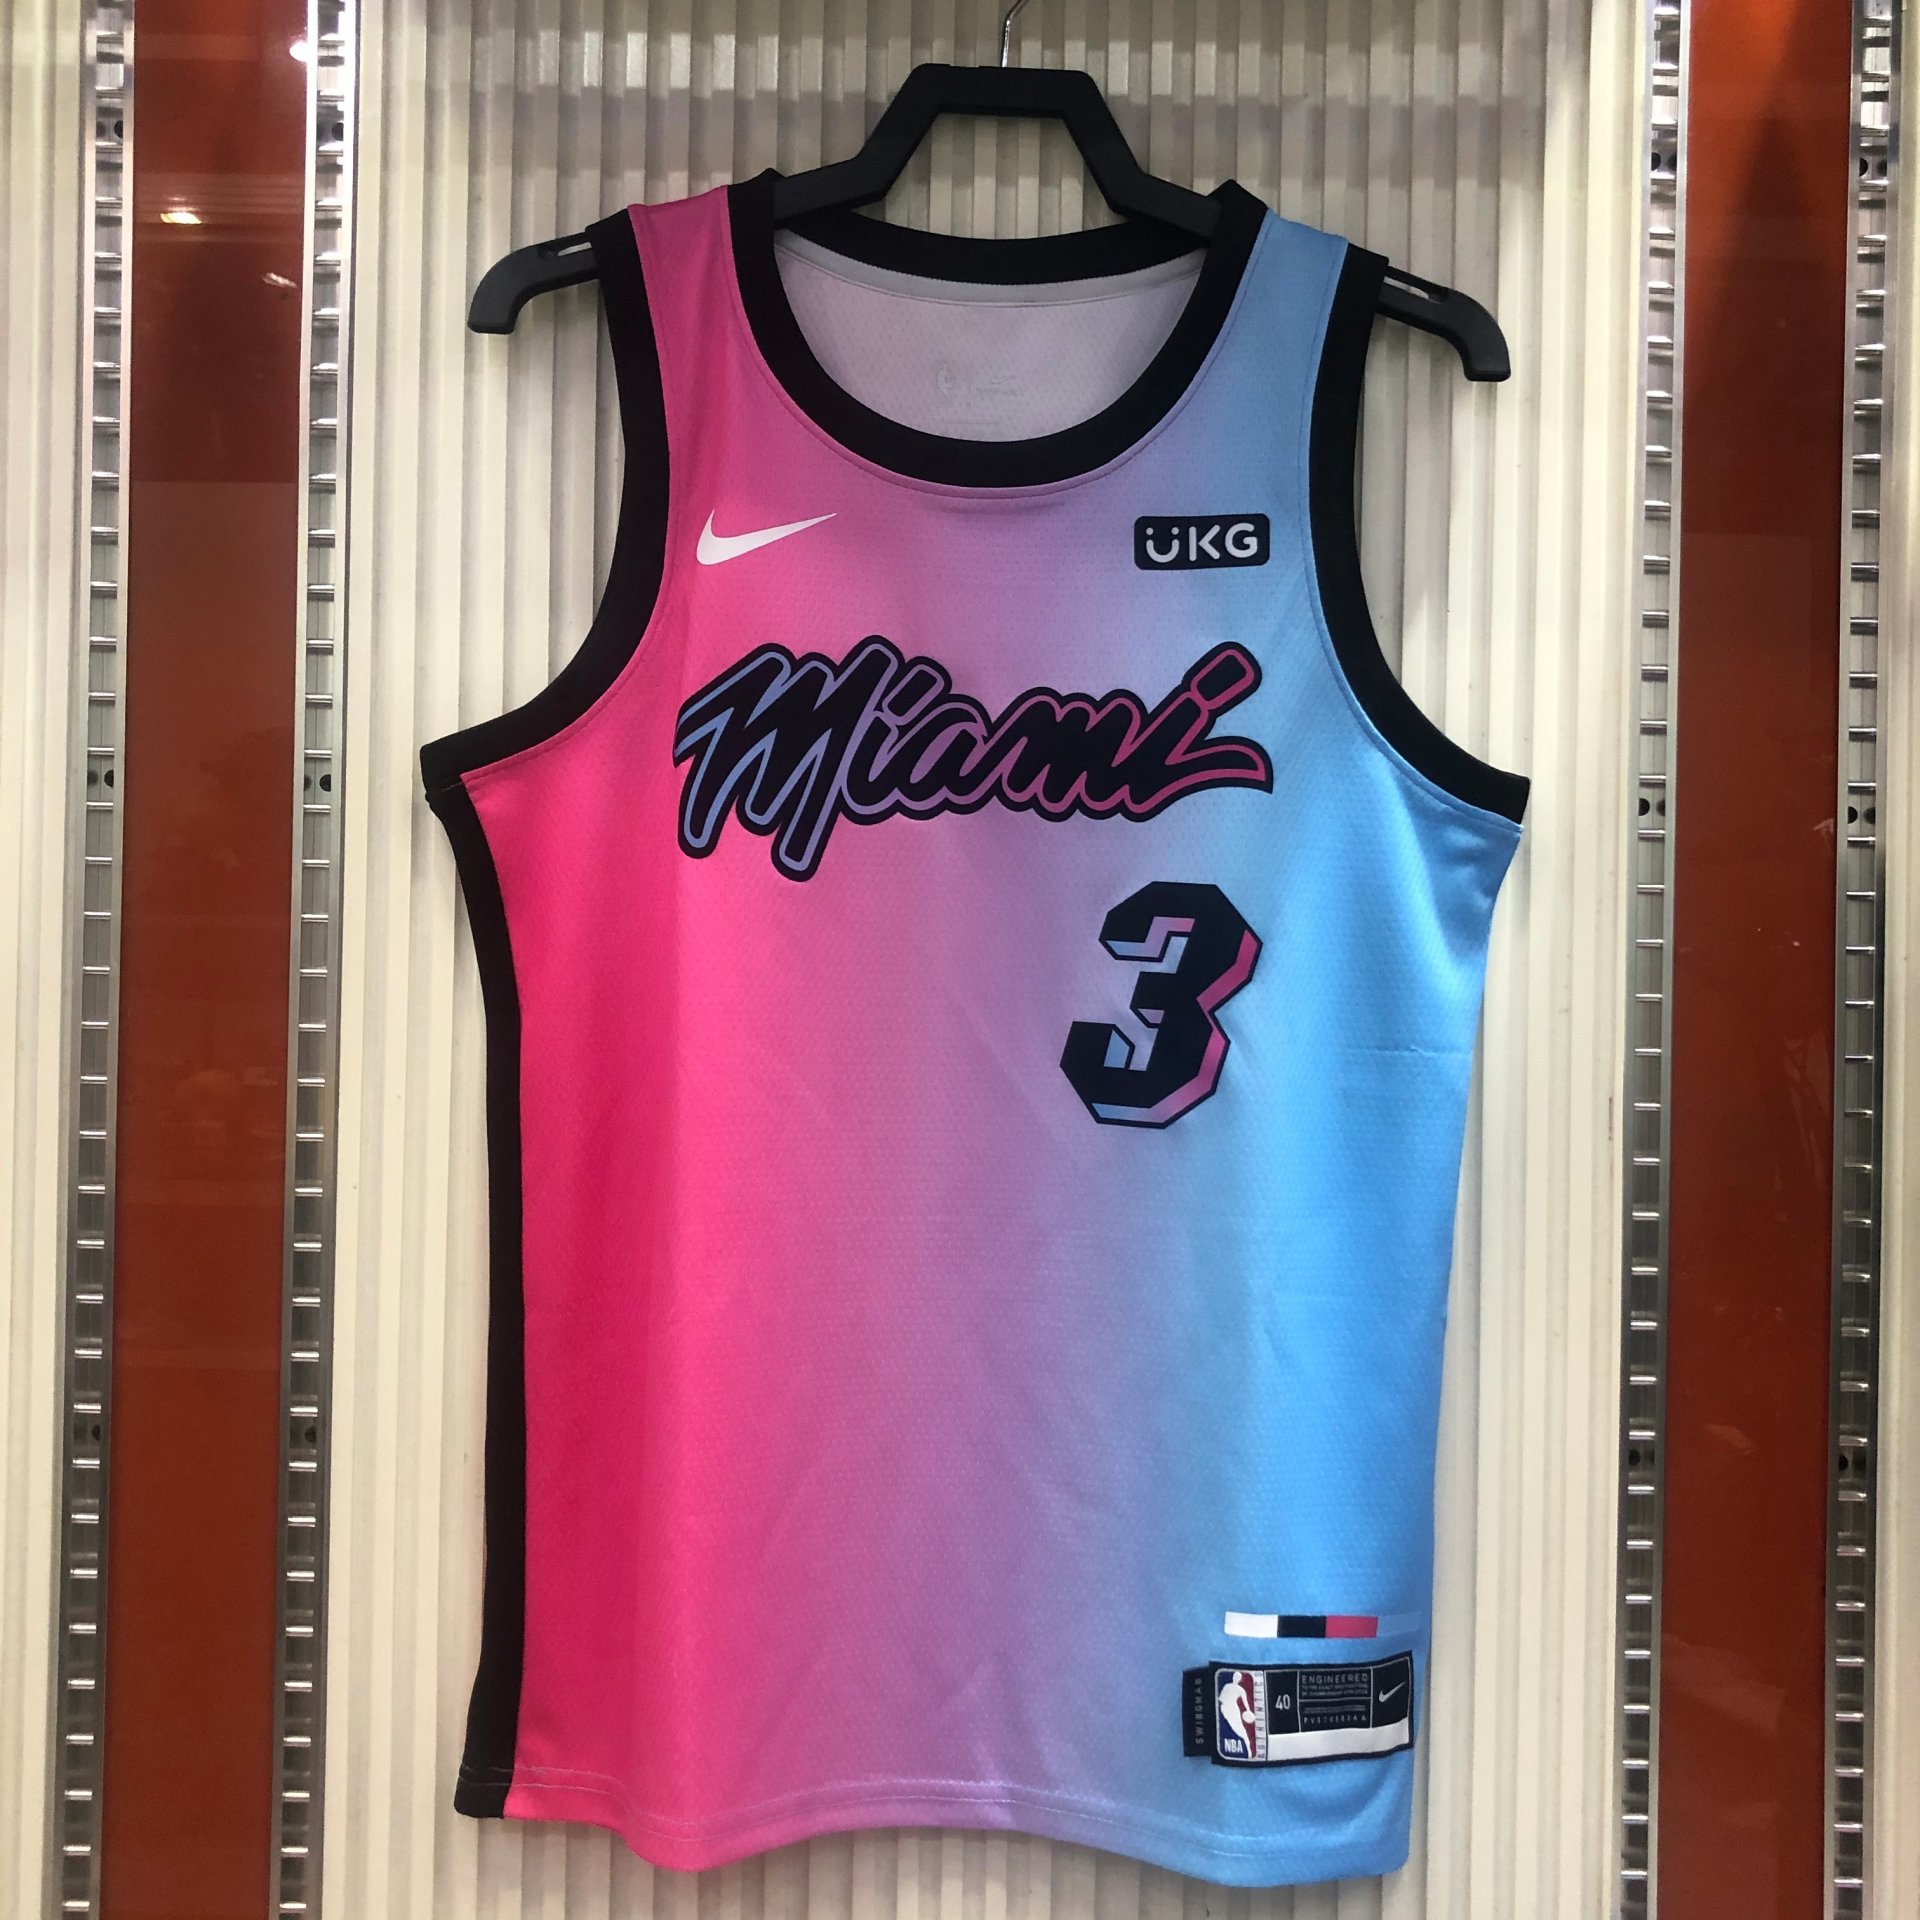 Miami Heat 2020/21 City Edition Swingman Shorts - Pink/Light Blue